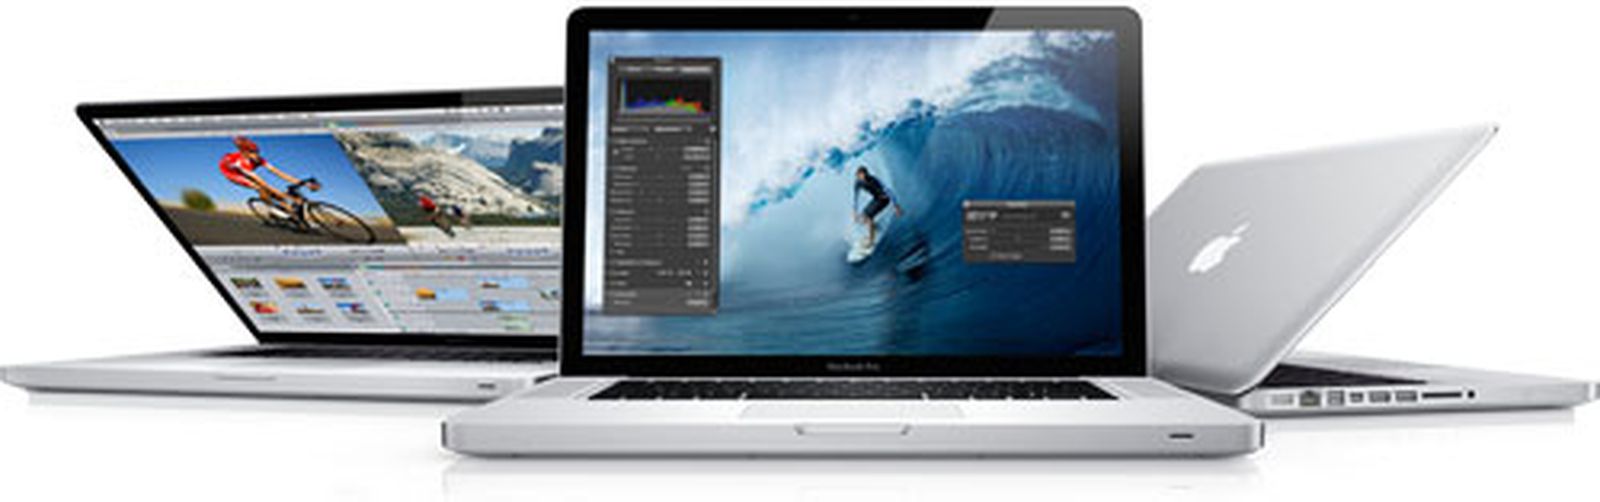 macbook pro 13 inch mid 2012 max ram upgrade